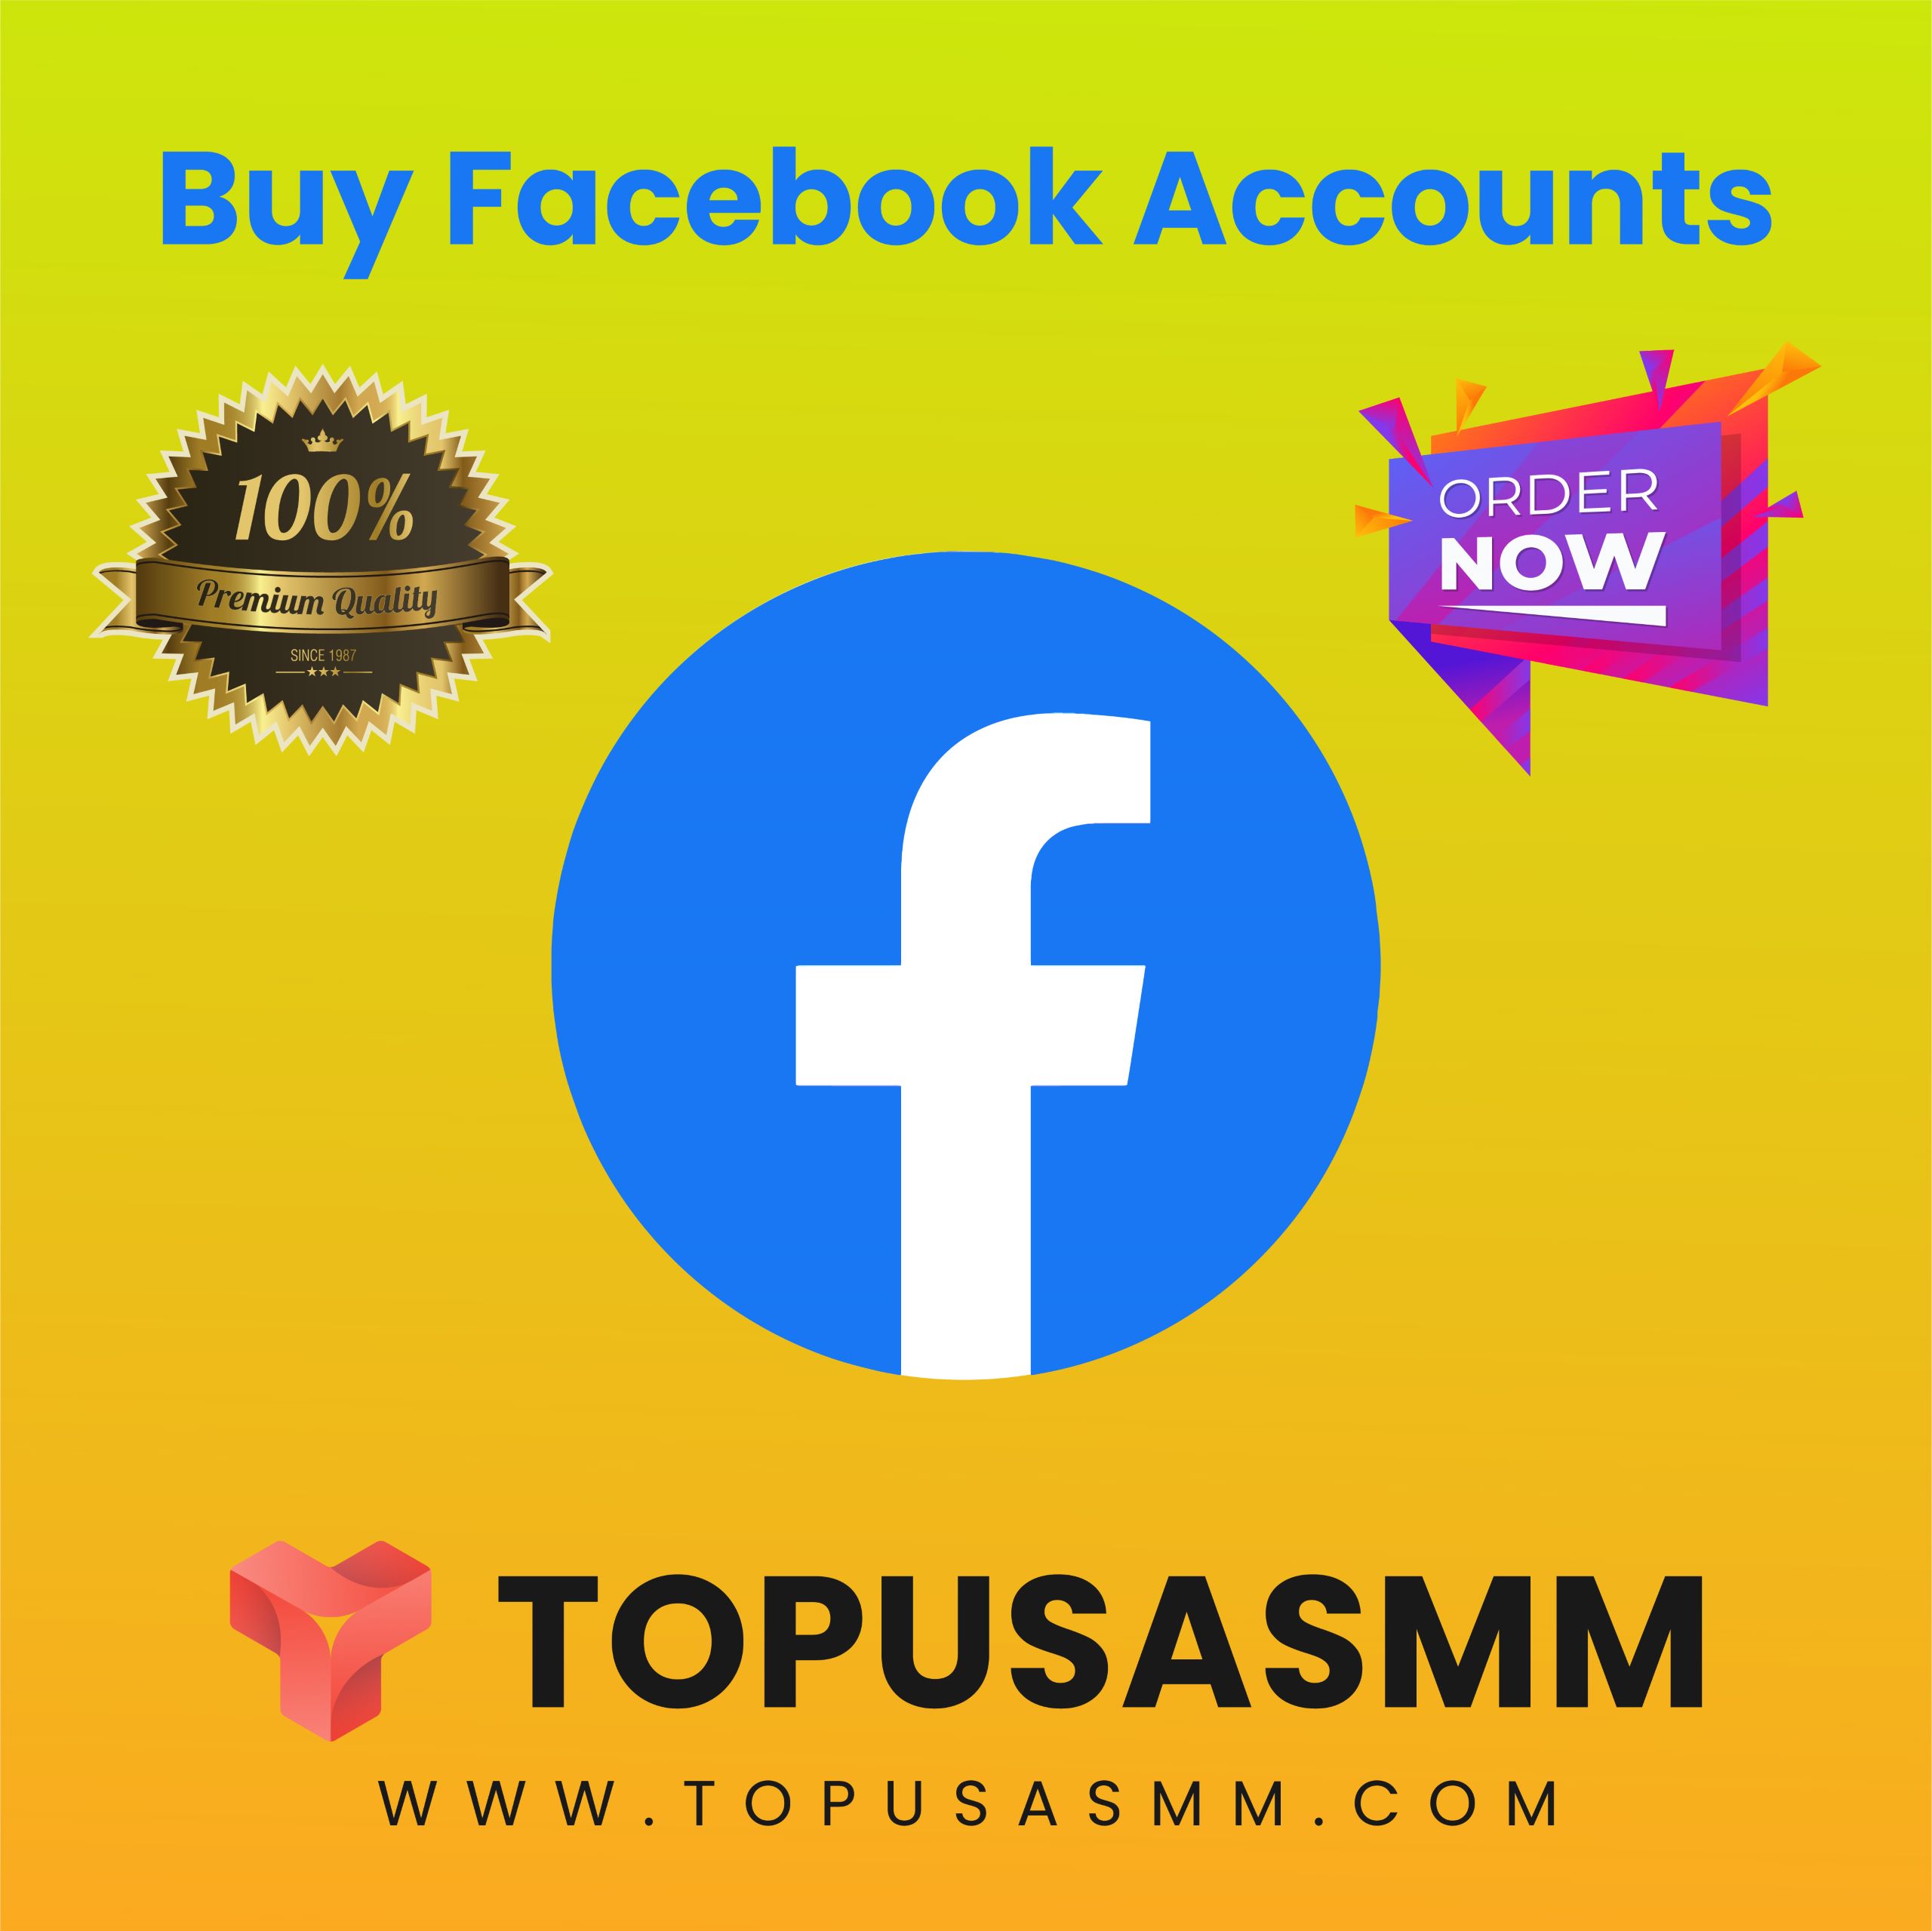 Buy Facebook Accounts - TopUsaSMM